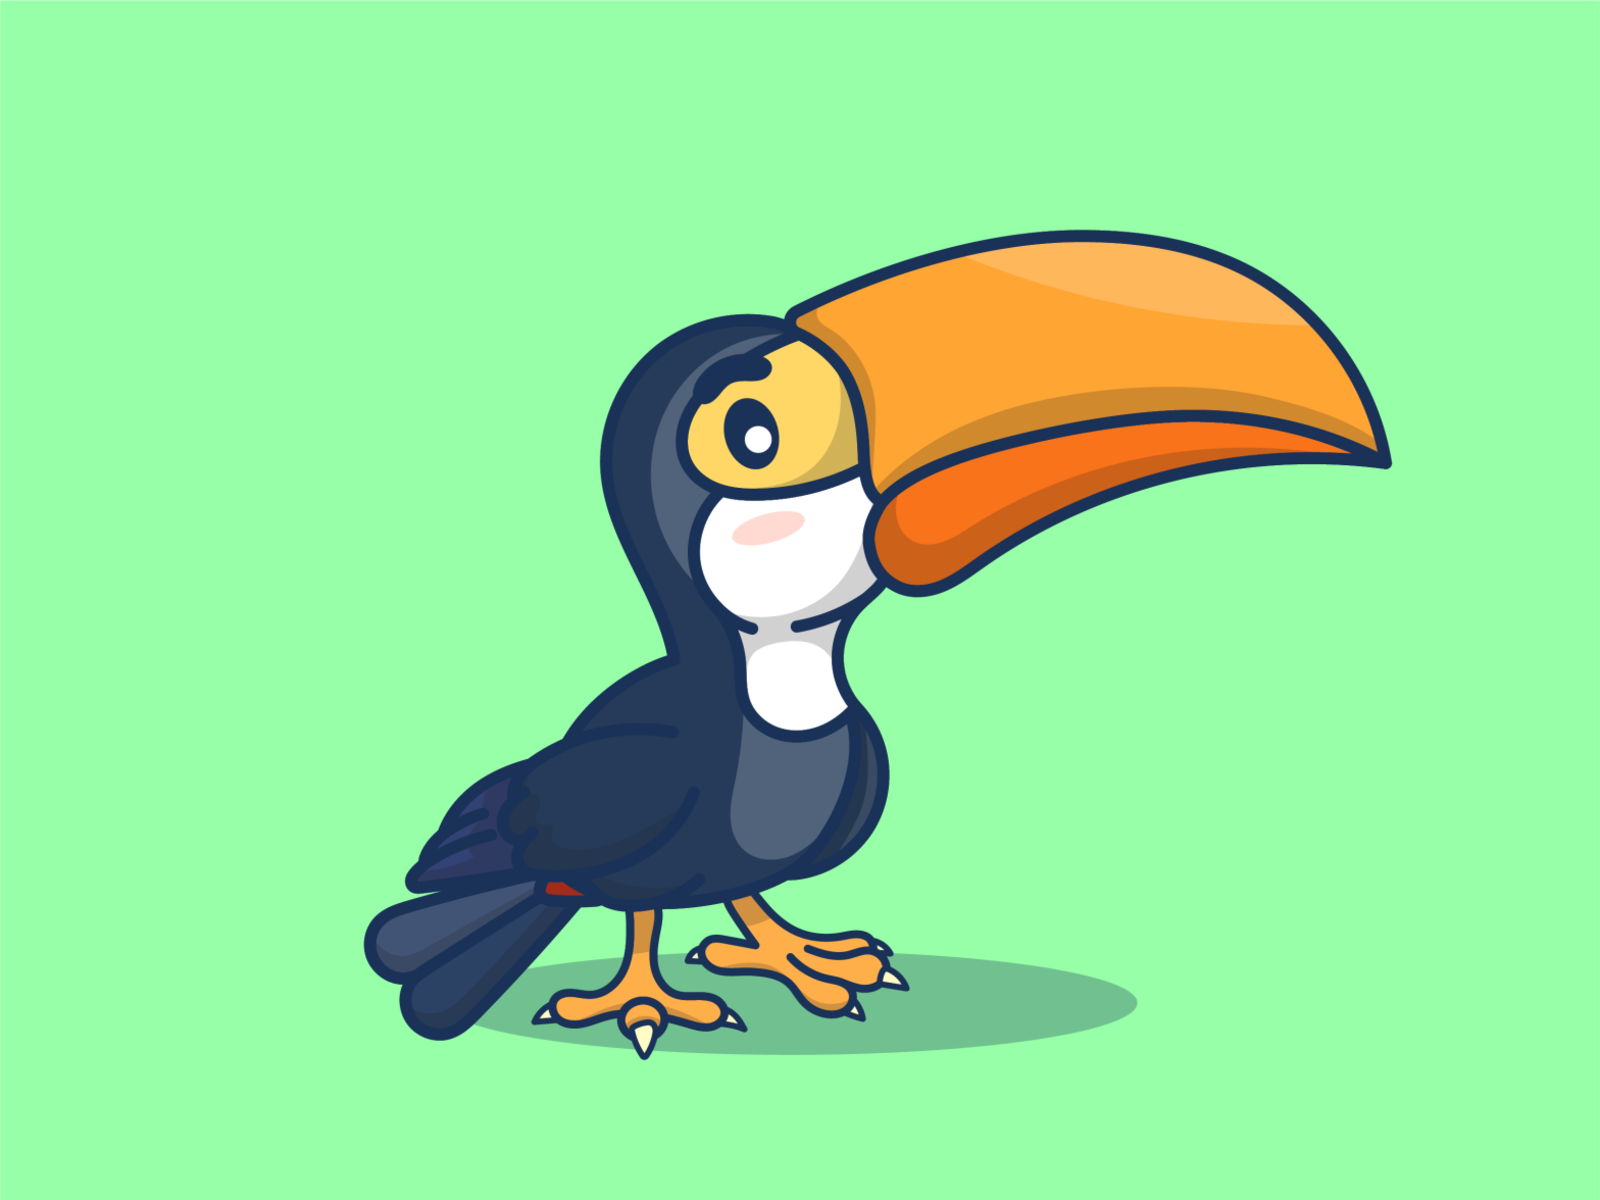 toucan png